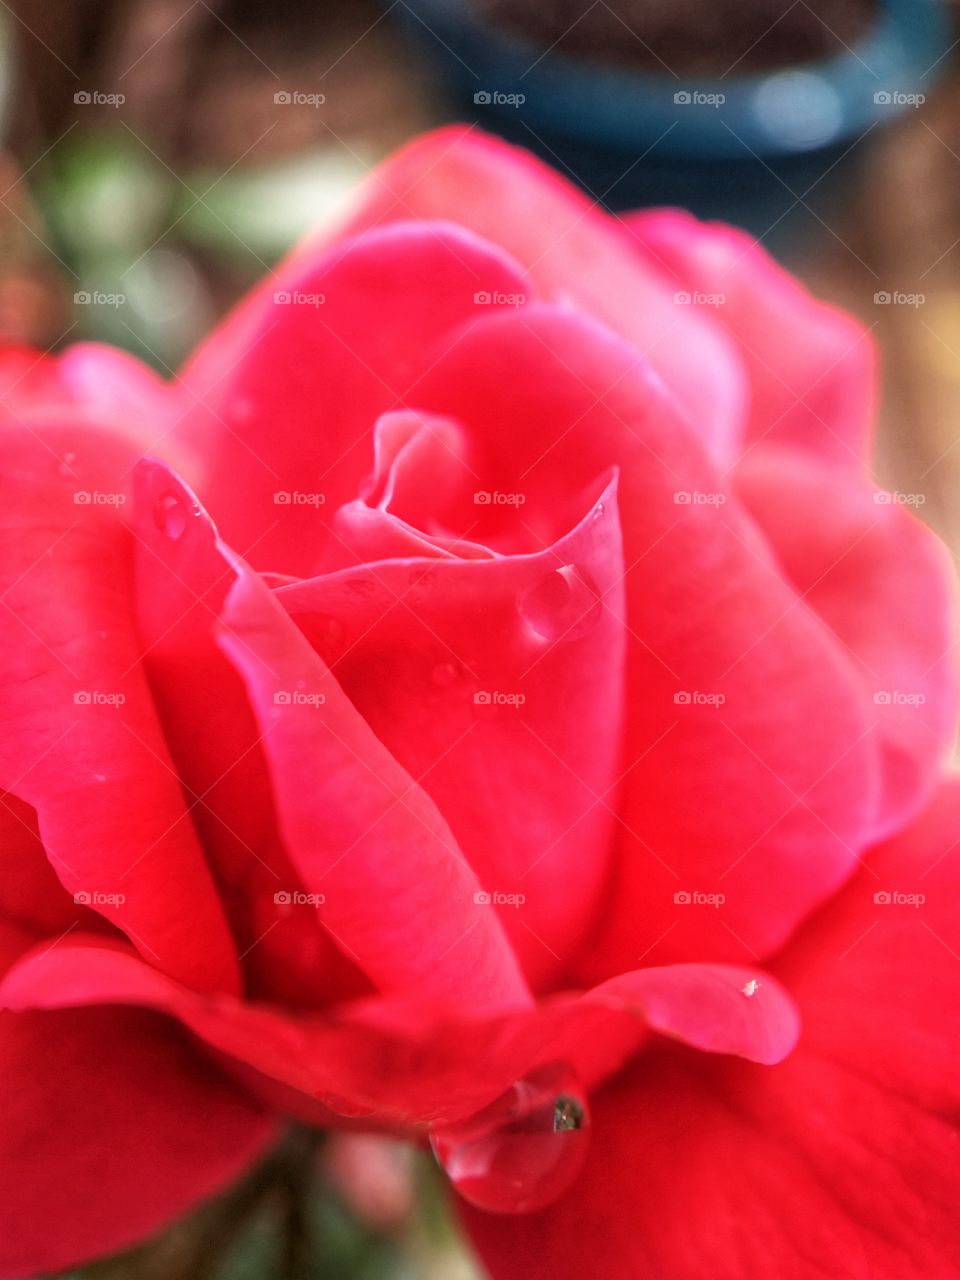 Pink knockout rose just starting to bloom. Macro close up photo. 